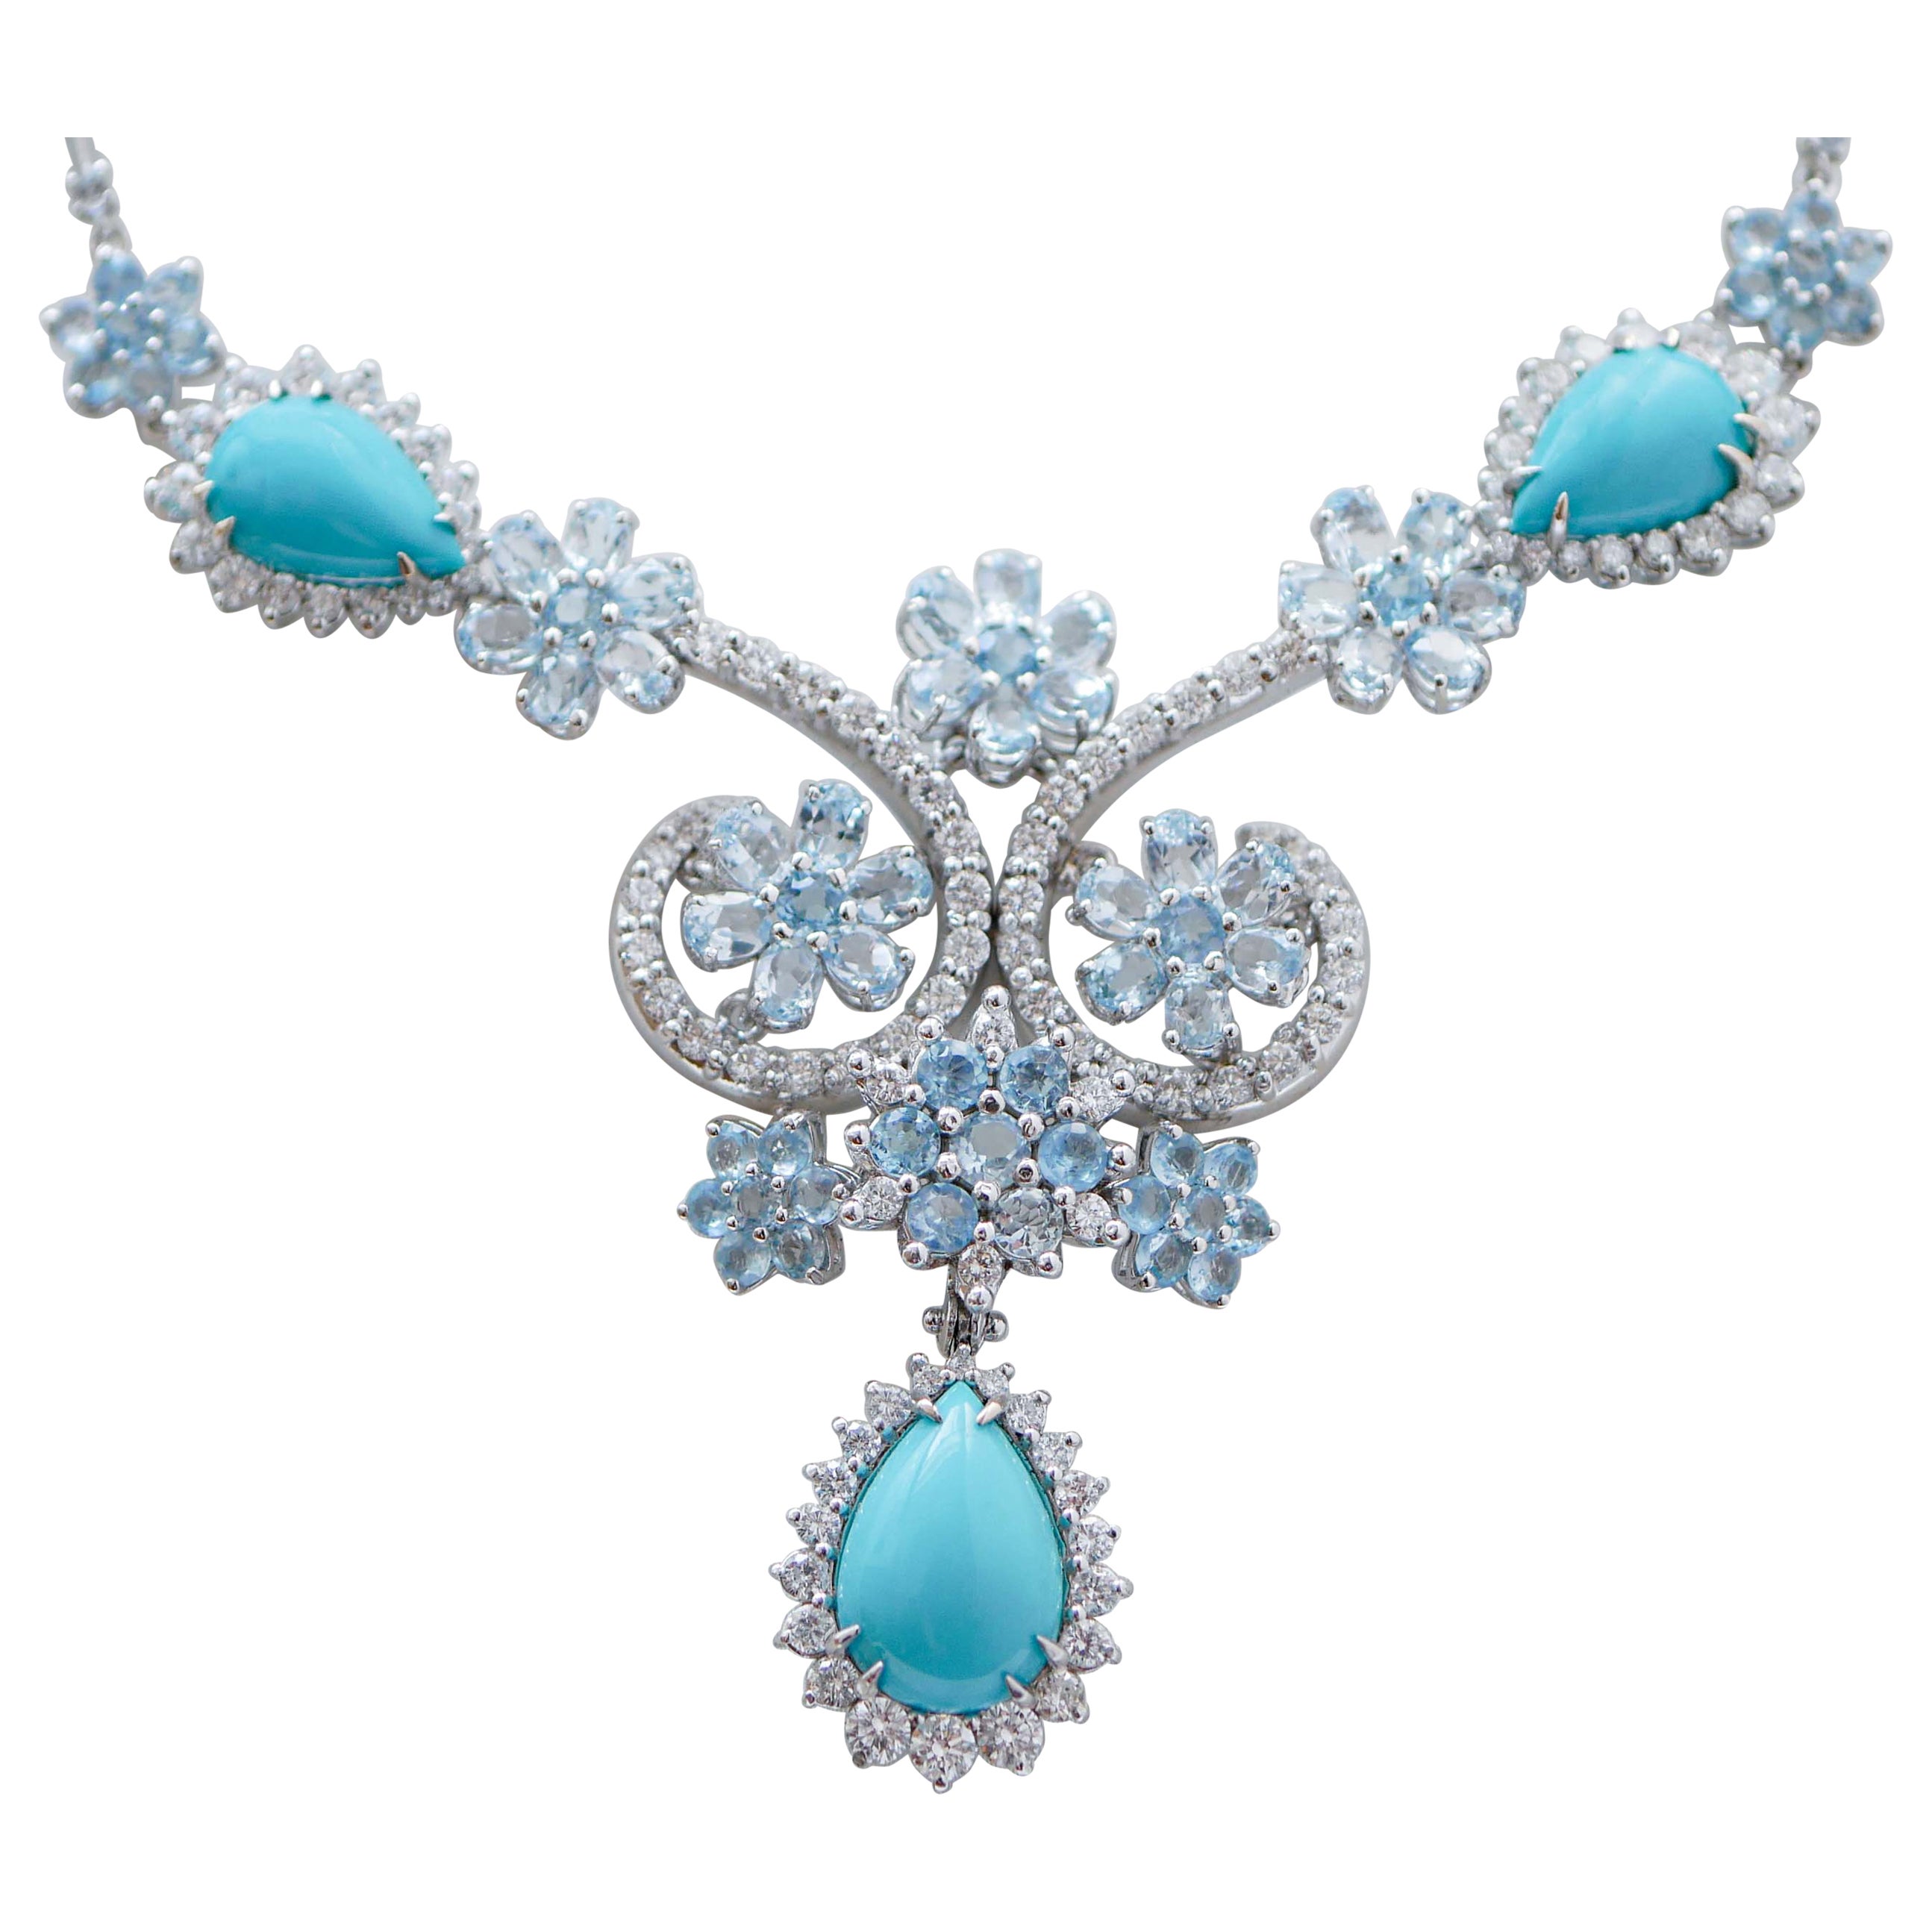 Aquamarine Colour Topazs, Diamonds, Turquoise, 18 Karat White Gold Necklace.